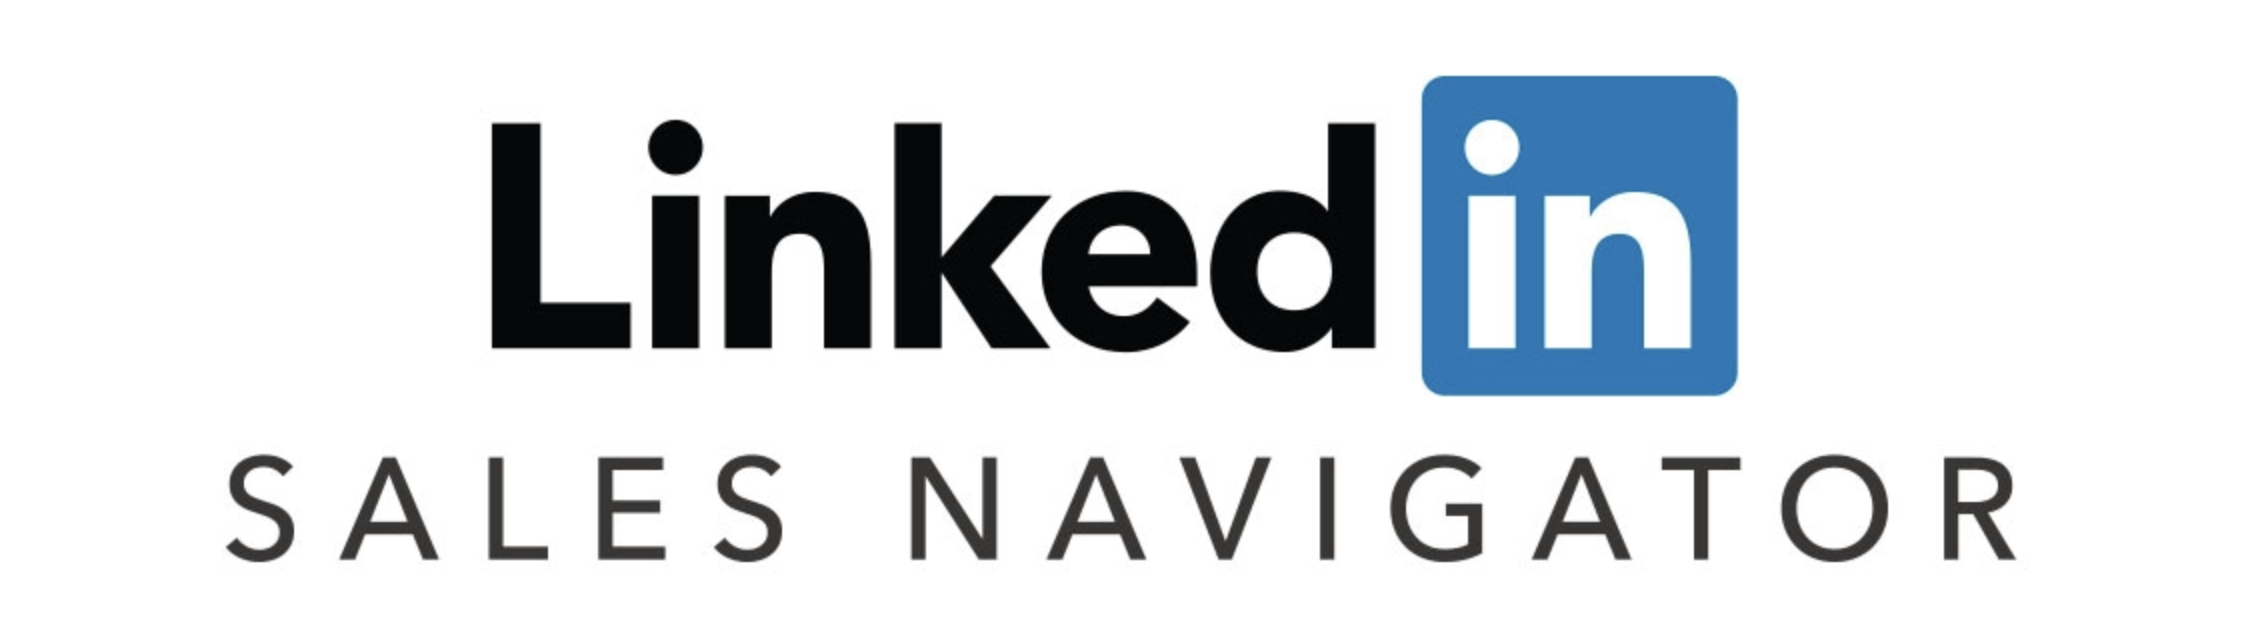 Linkedin Sales navigator Logo